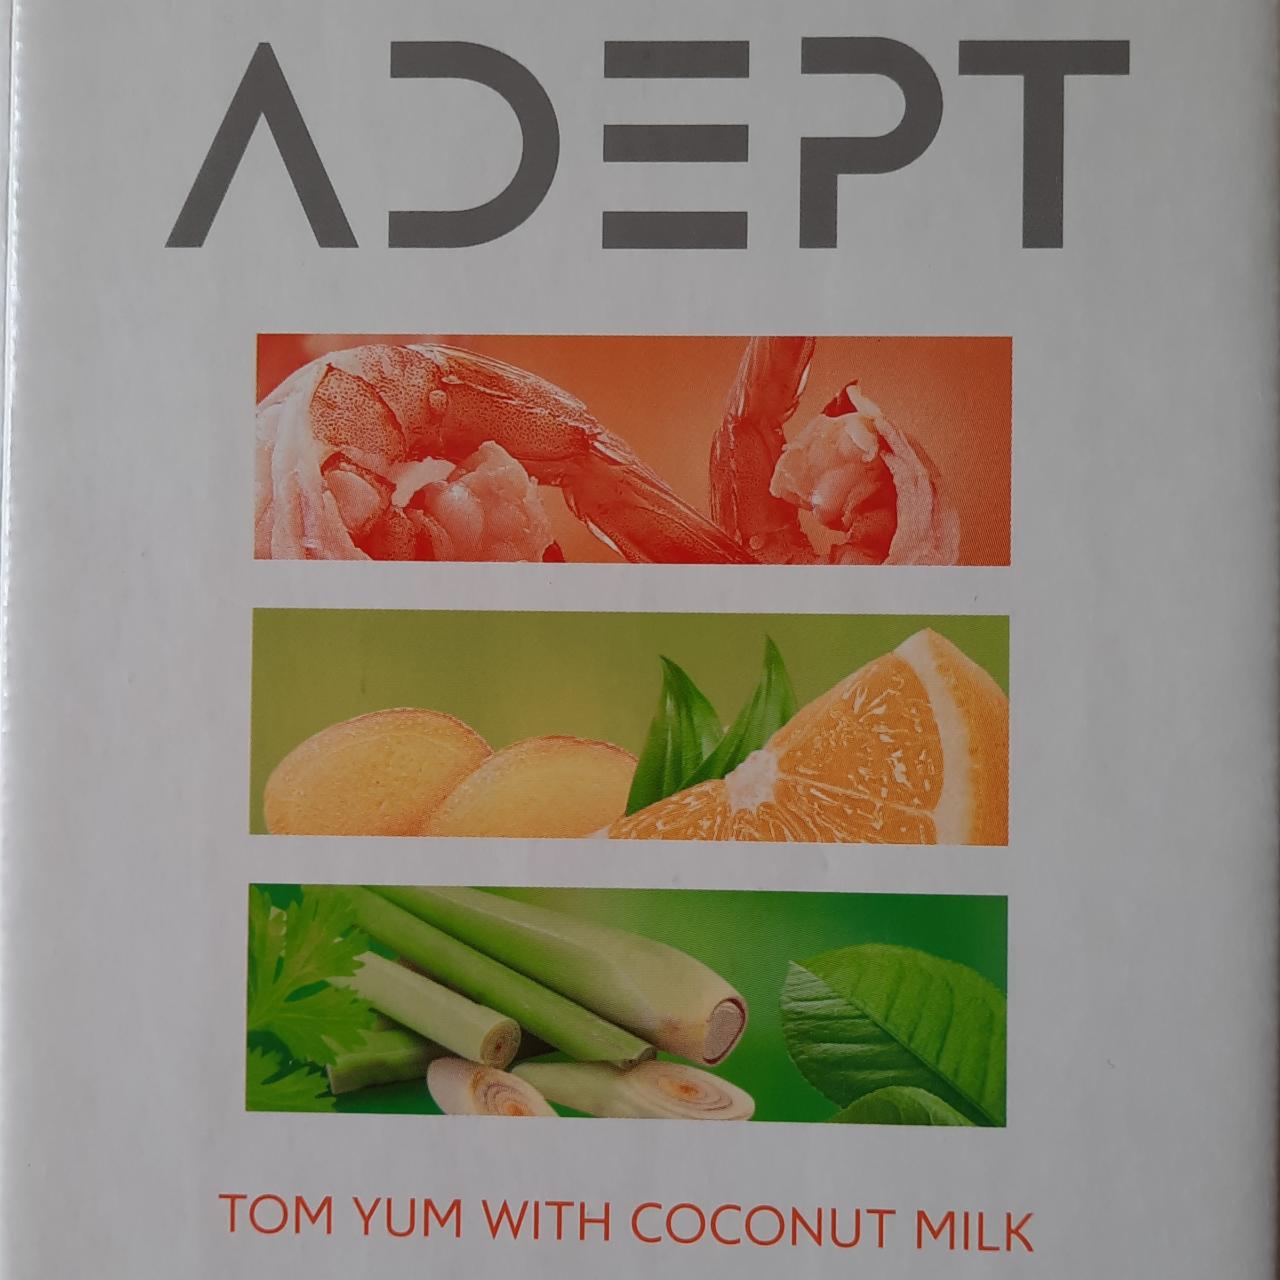 Fotografie - Tom yum with coconut milk Adept